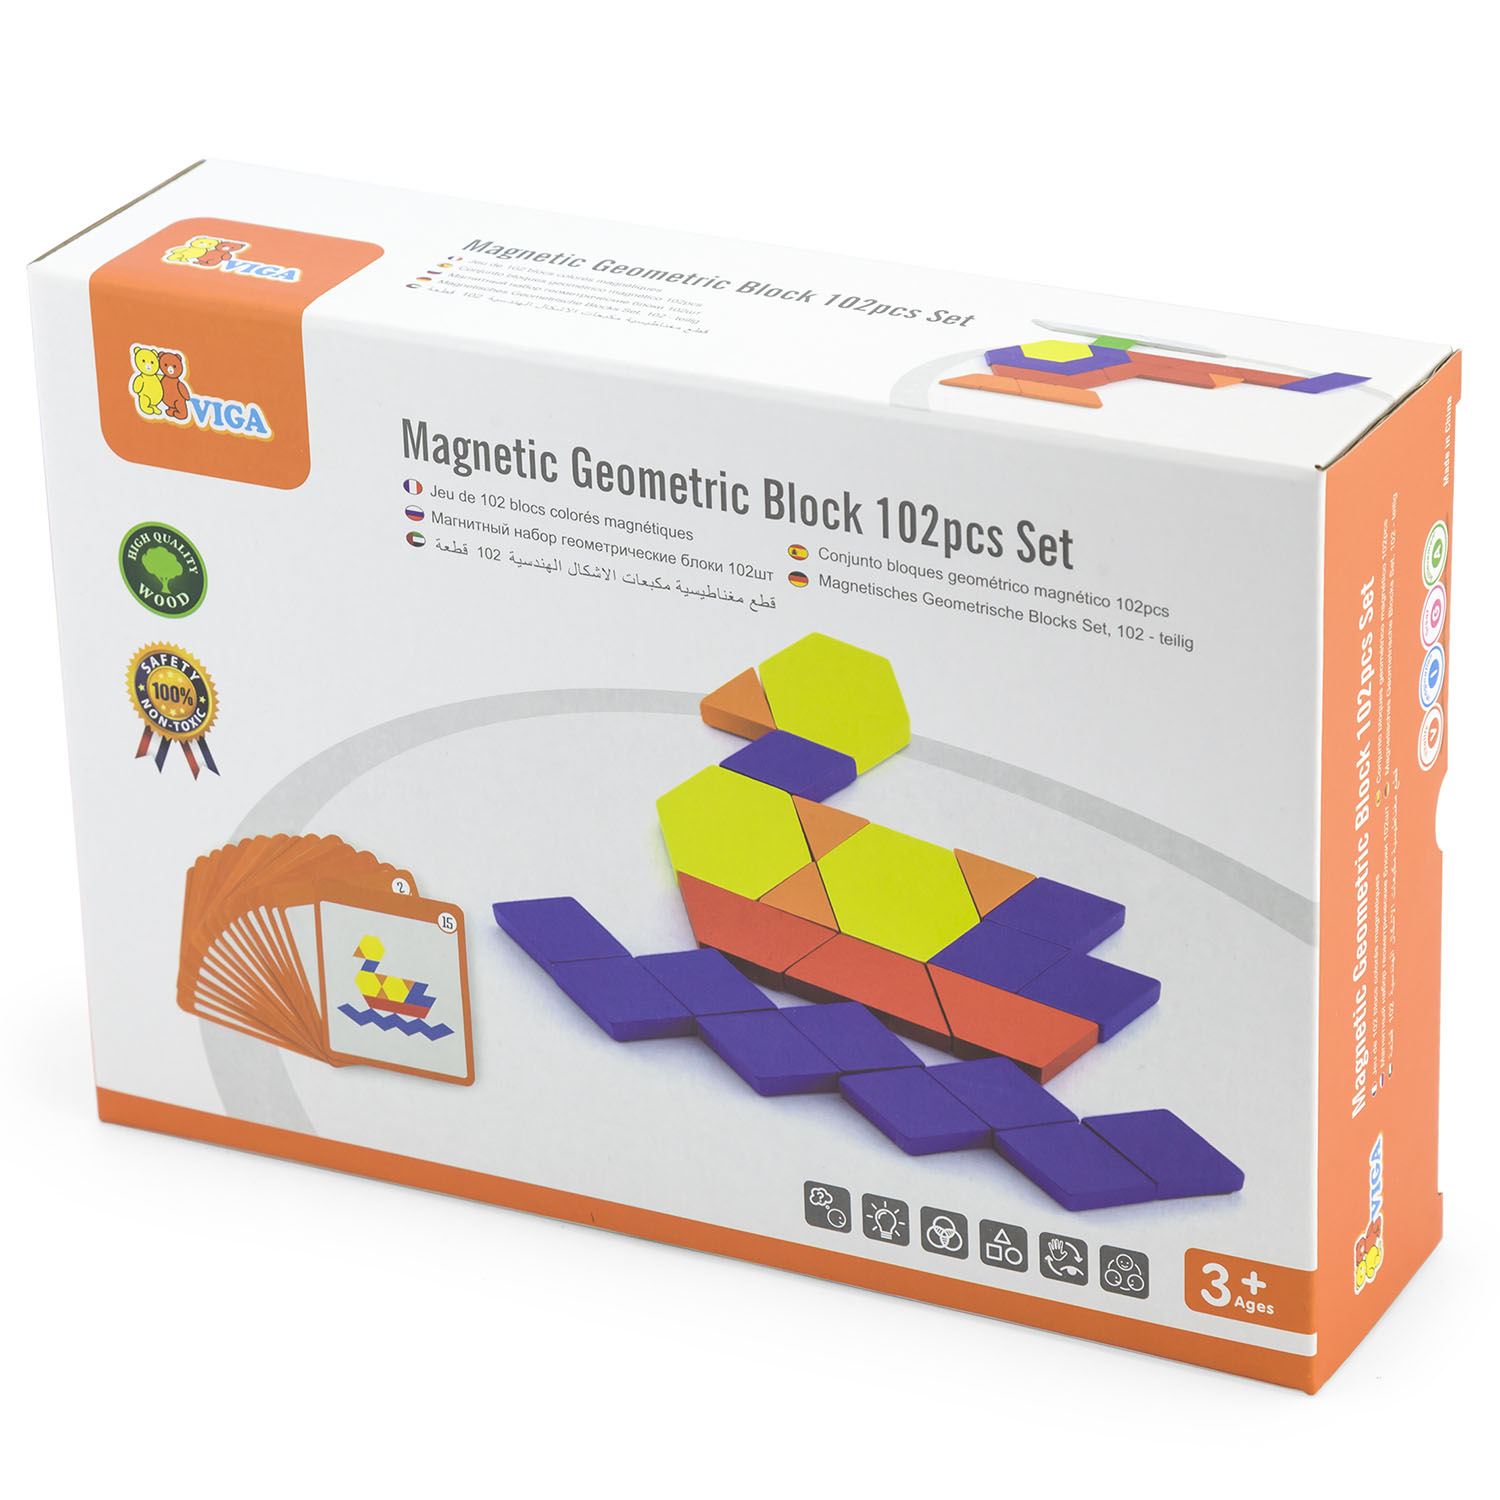 Viga packaging containing wooden magnetic geometric blocks